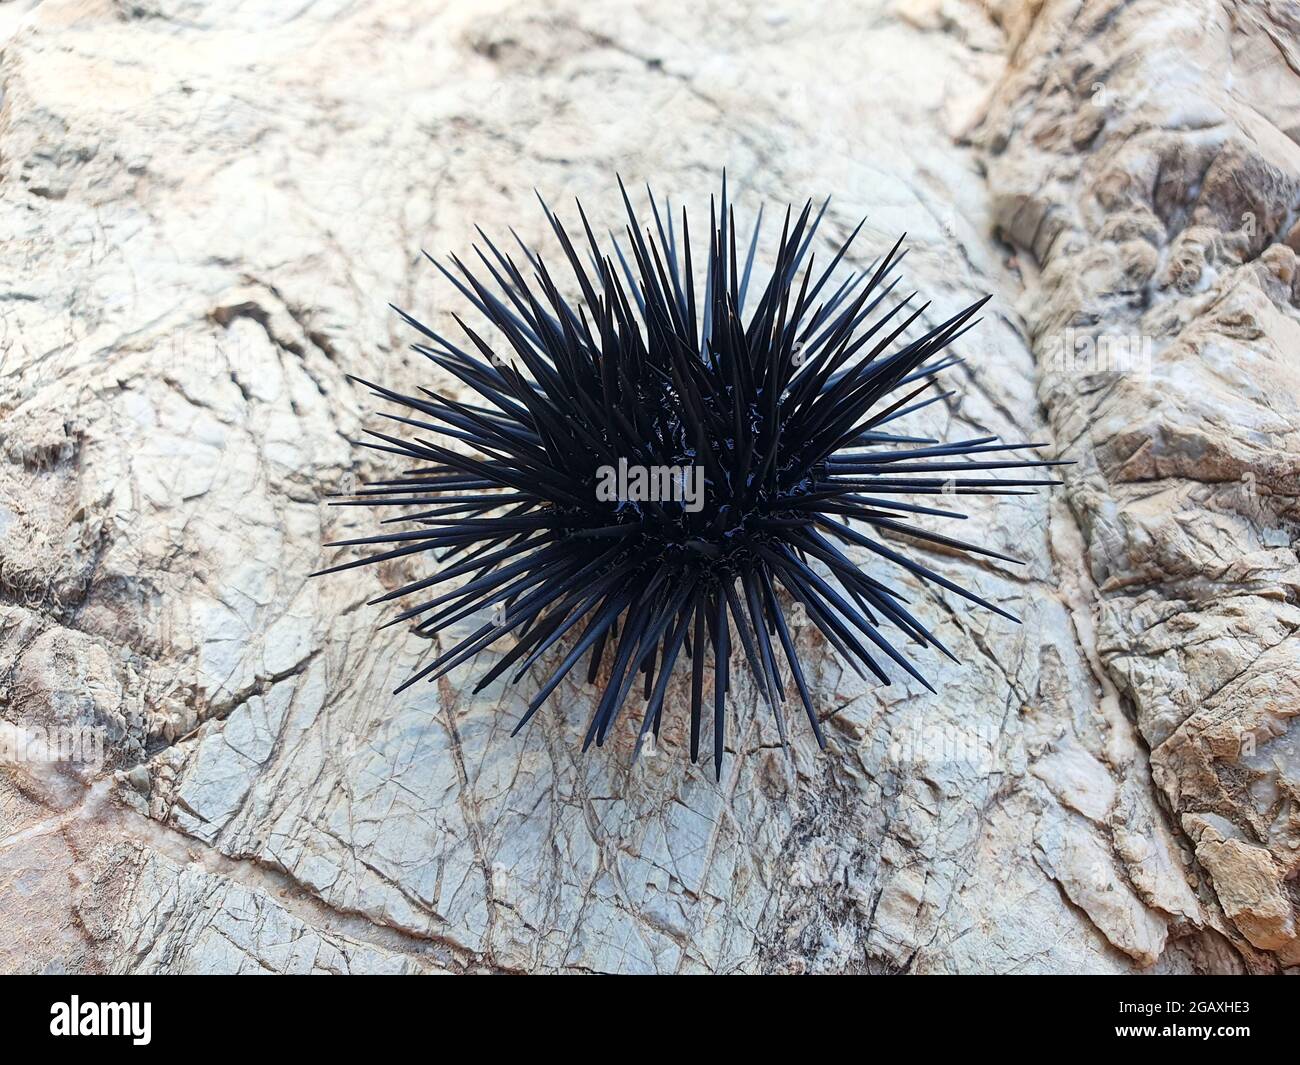 Small sea urchin on a rocky shore. A beautiful marine animal with black long needles. Stock Photo